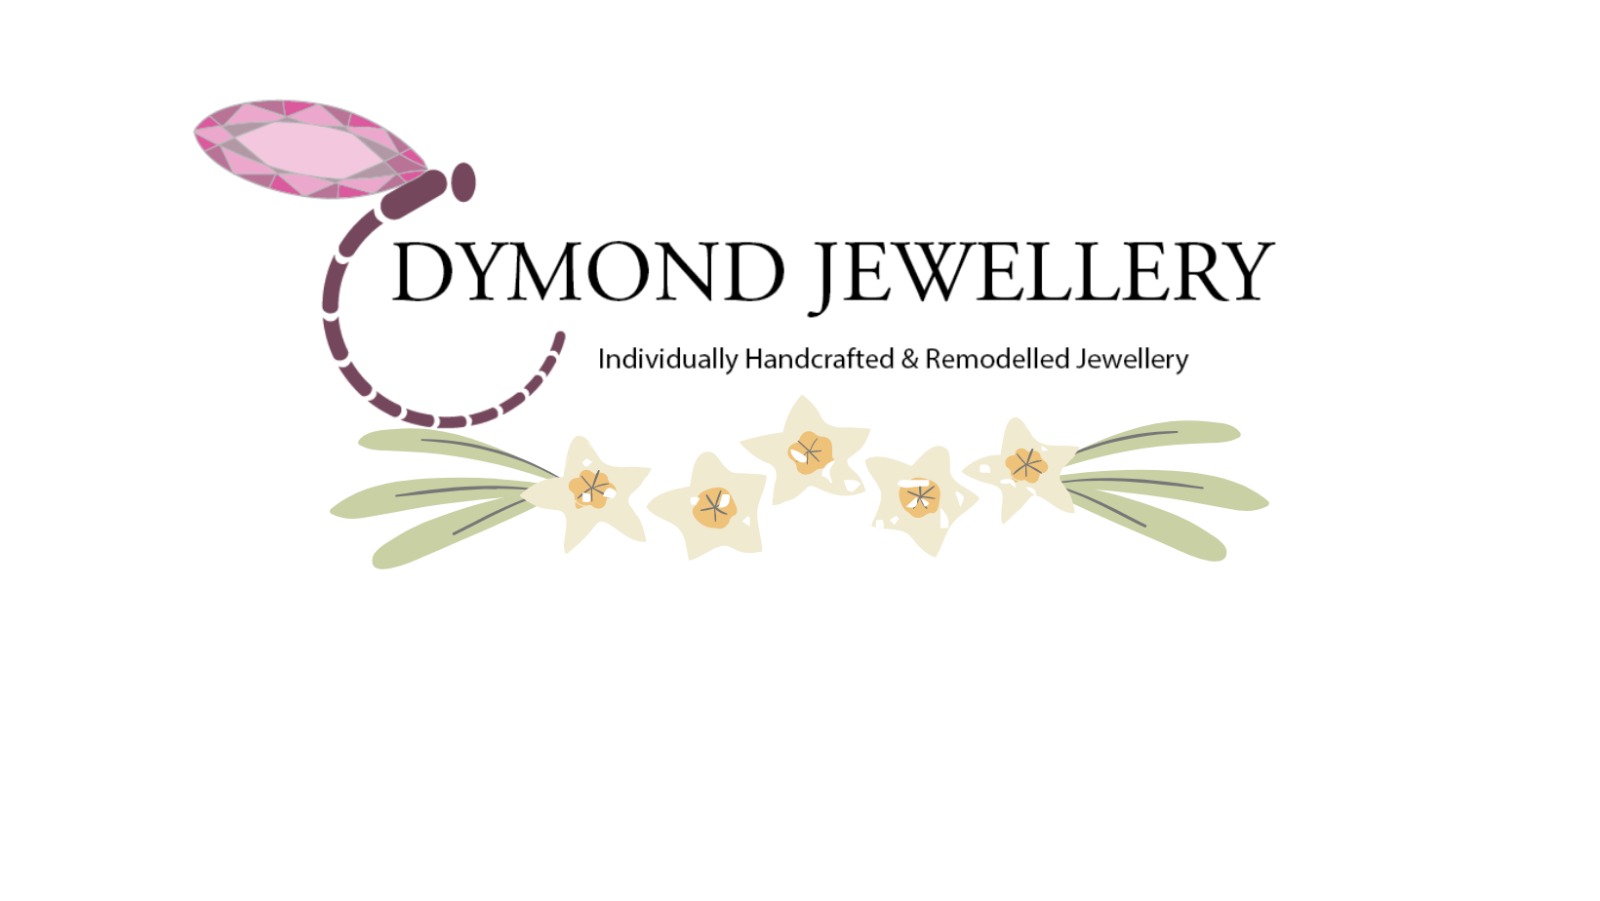 Dymond Jewellery